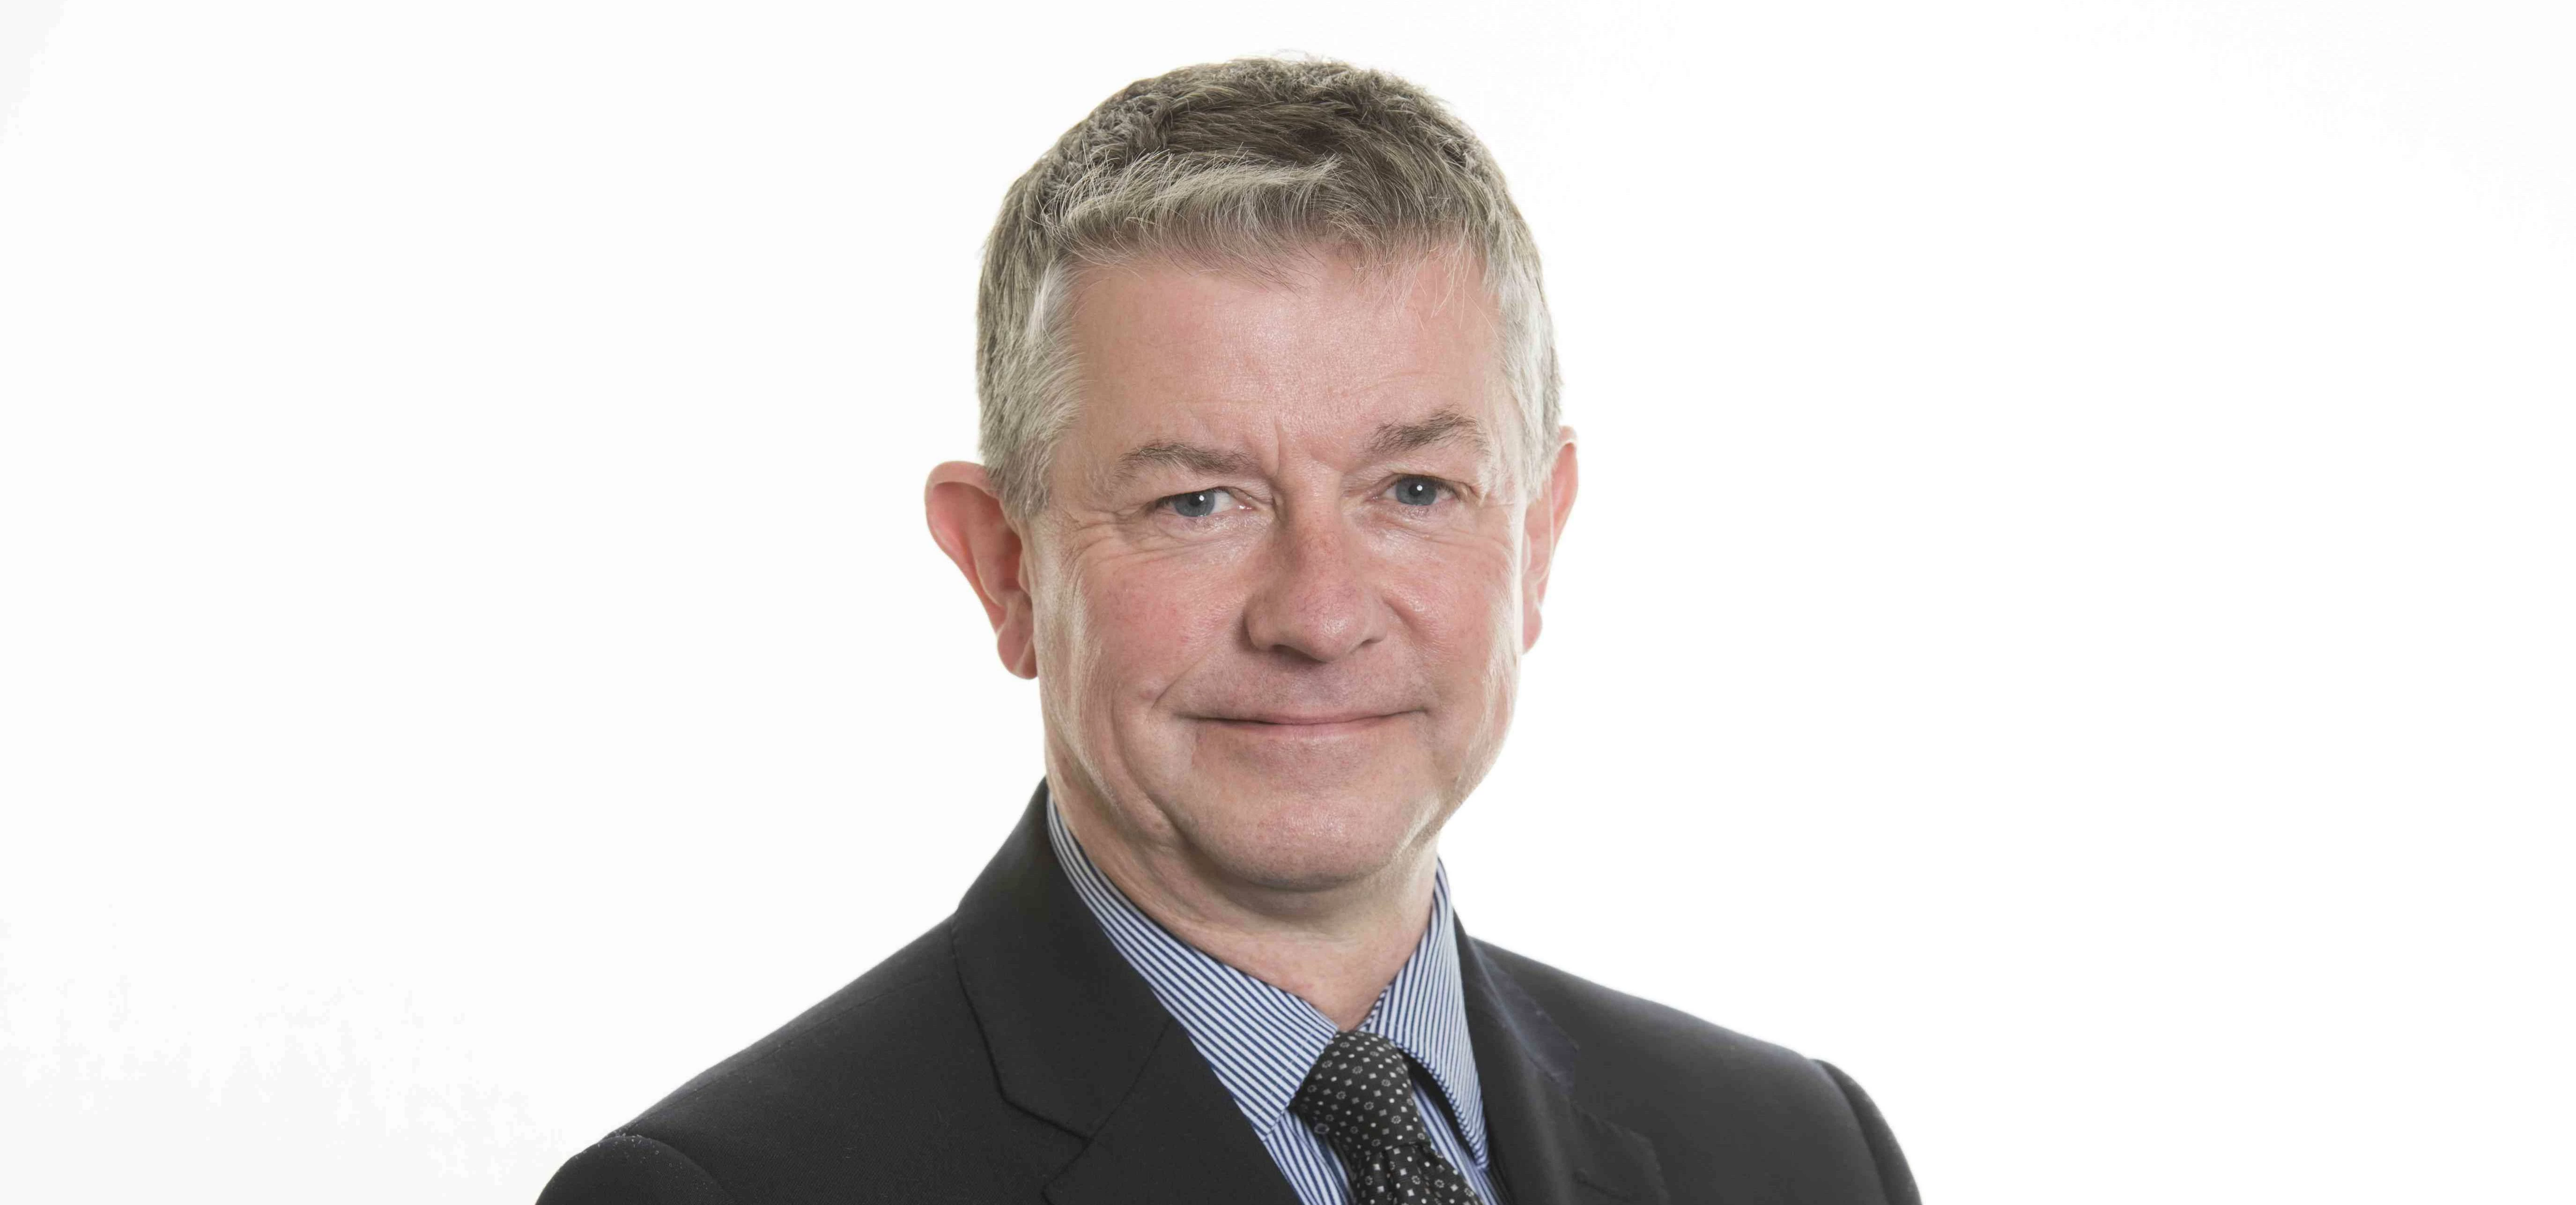 Tim Hinchcliffe, of new commercial insurance brokerage, Gauntlet Lancashire